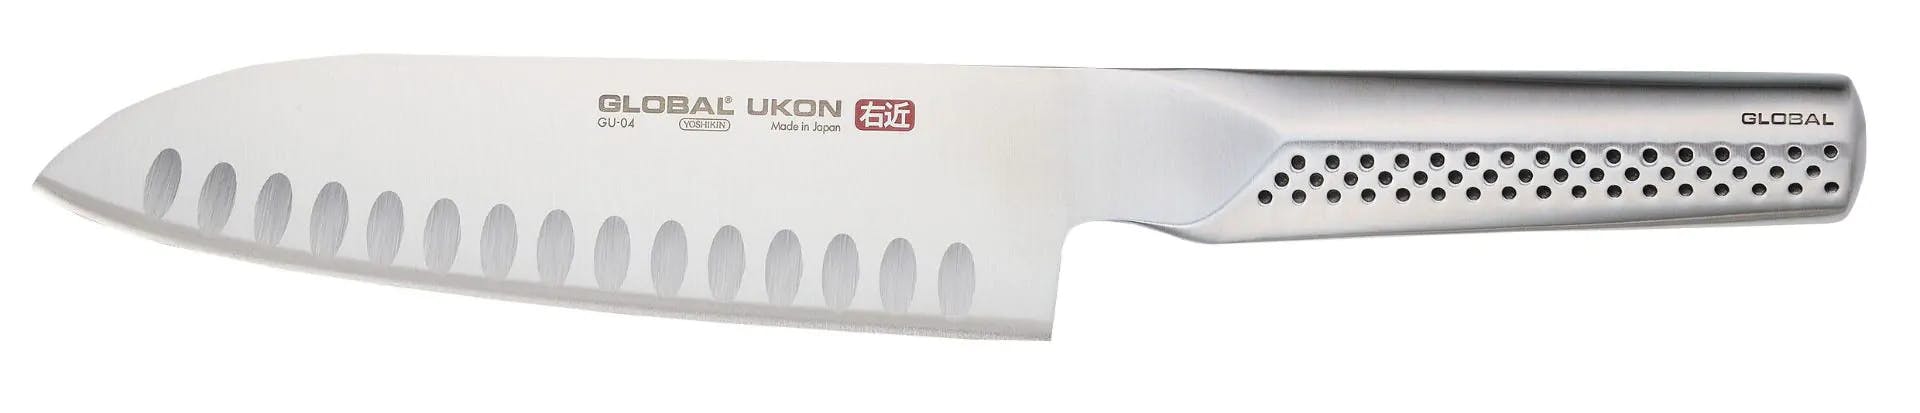 Global 6-Piece Knife Block Set Ukon